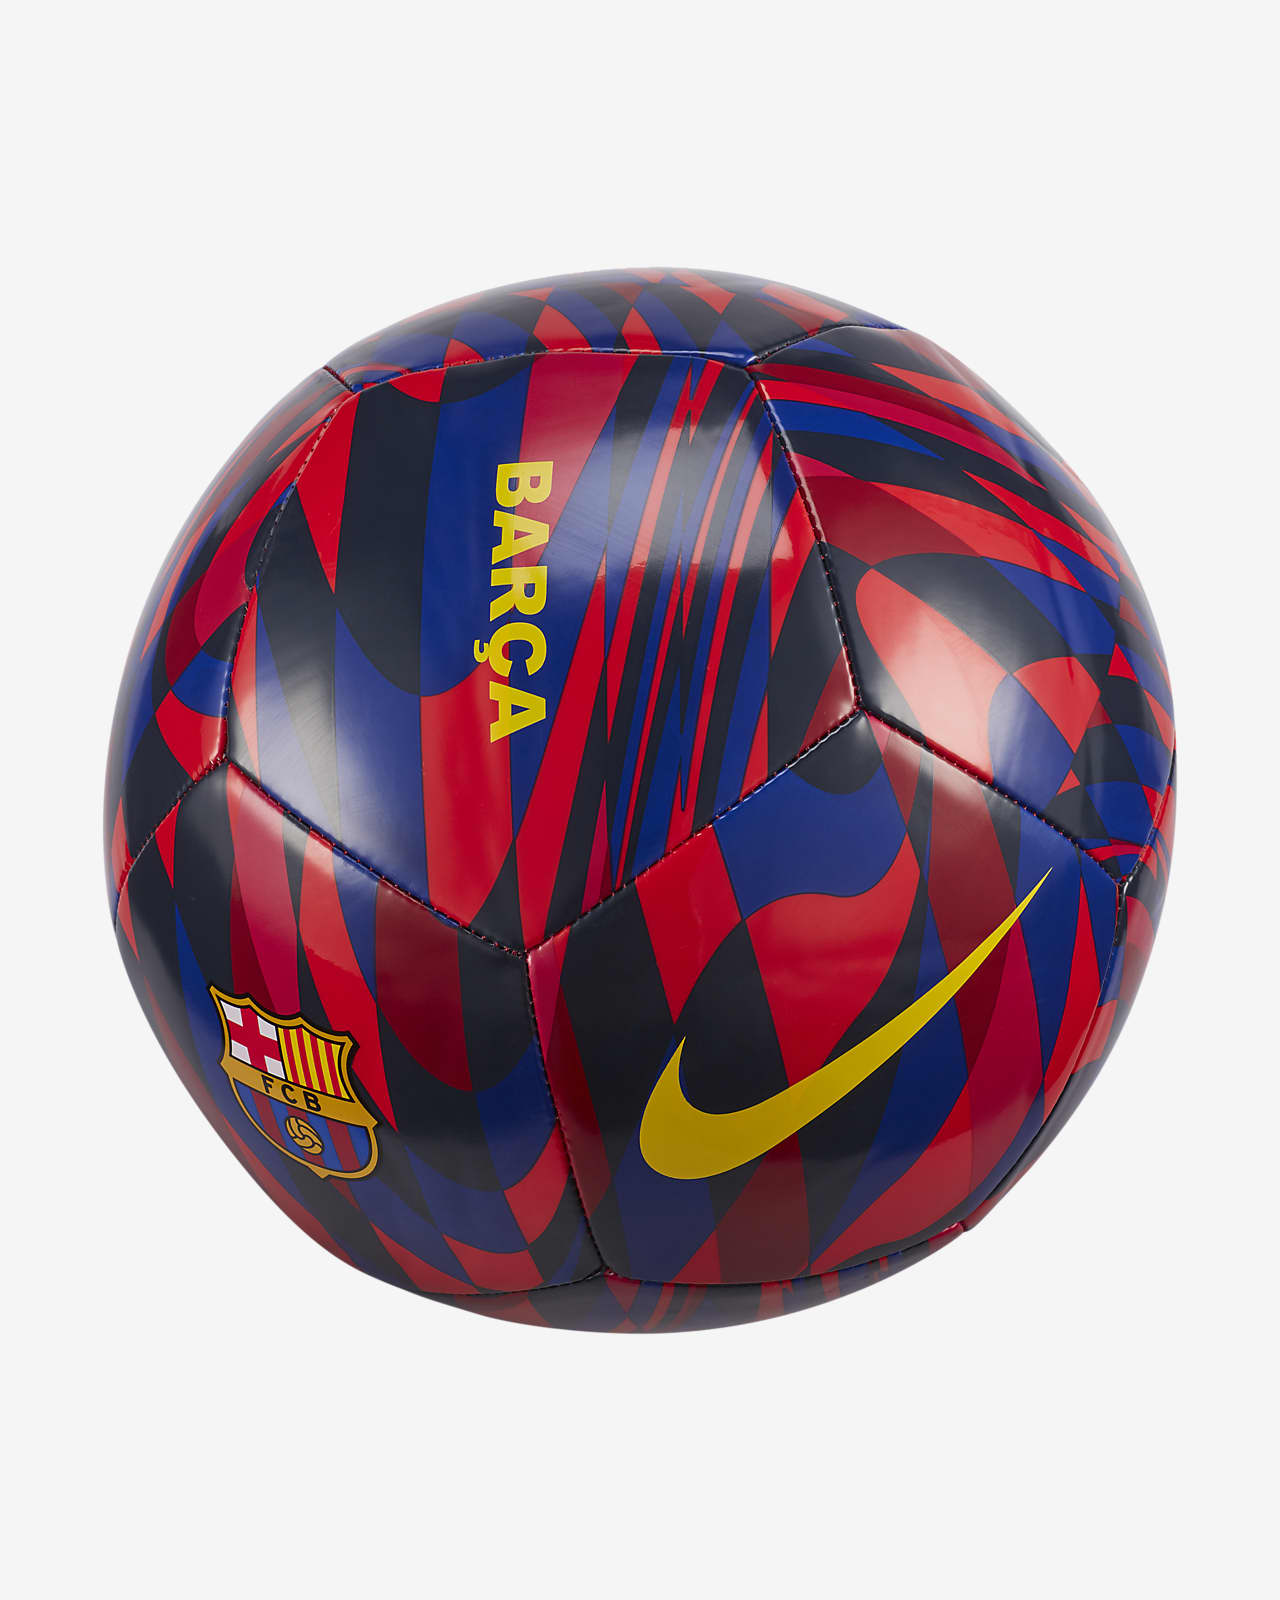 fcb soccer ball